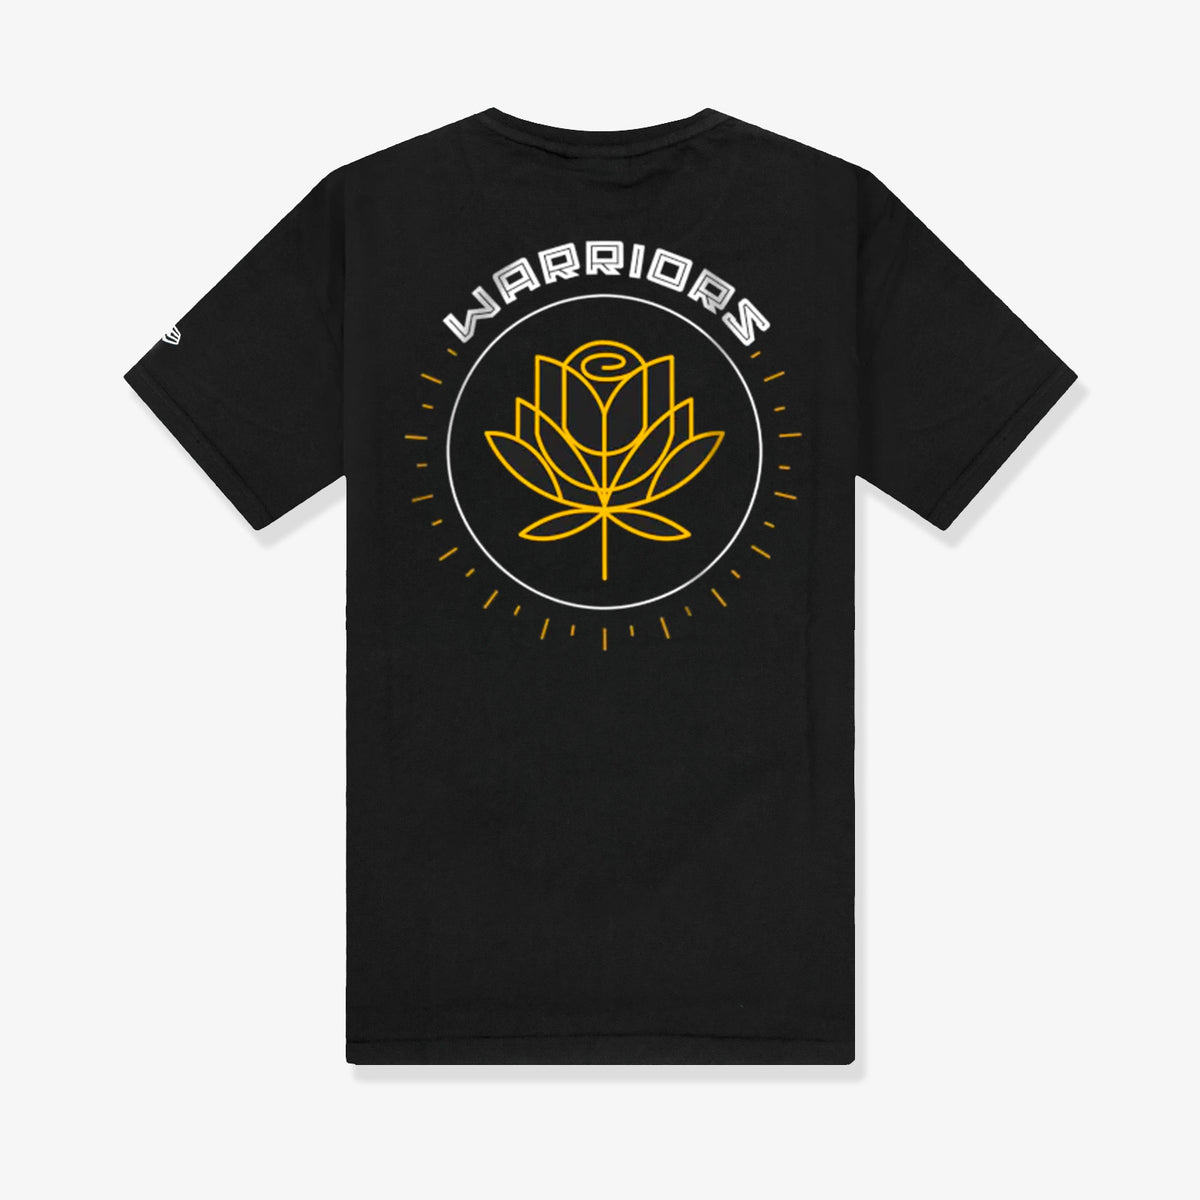 Golden State Warriors City Edition T-Shirt - Black